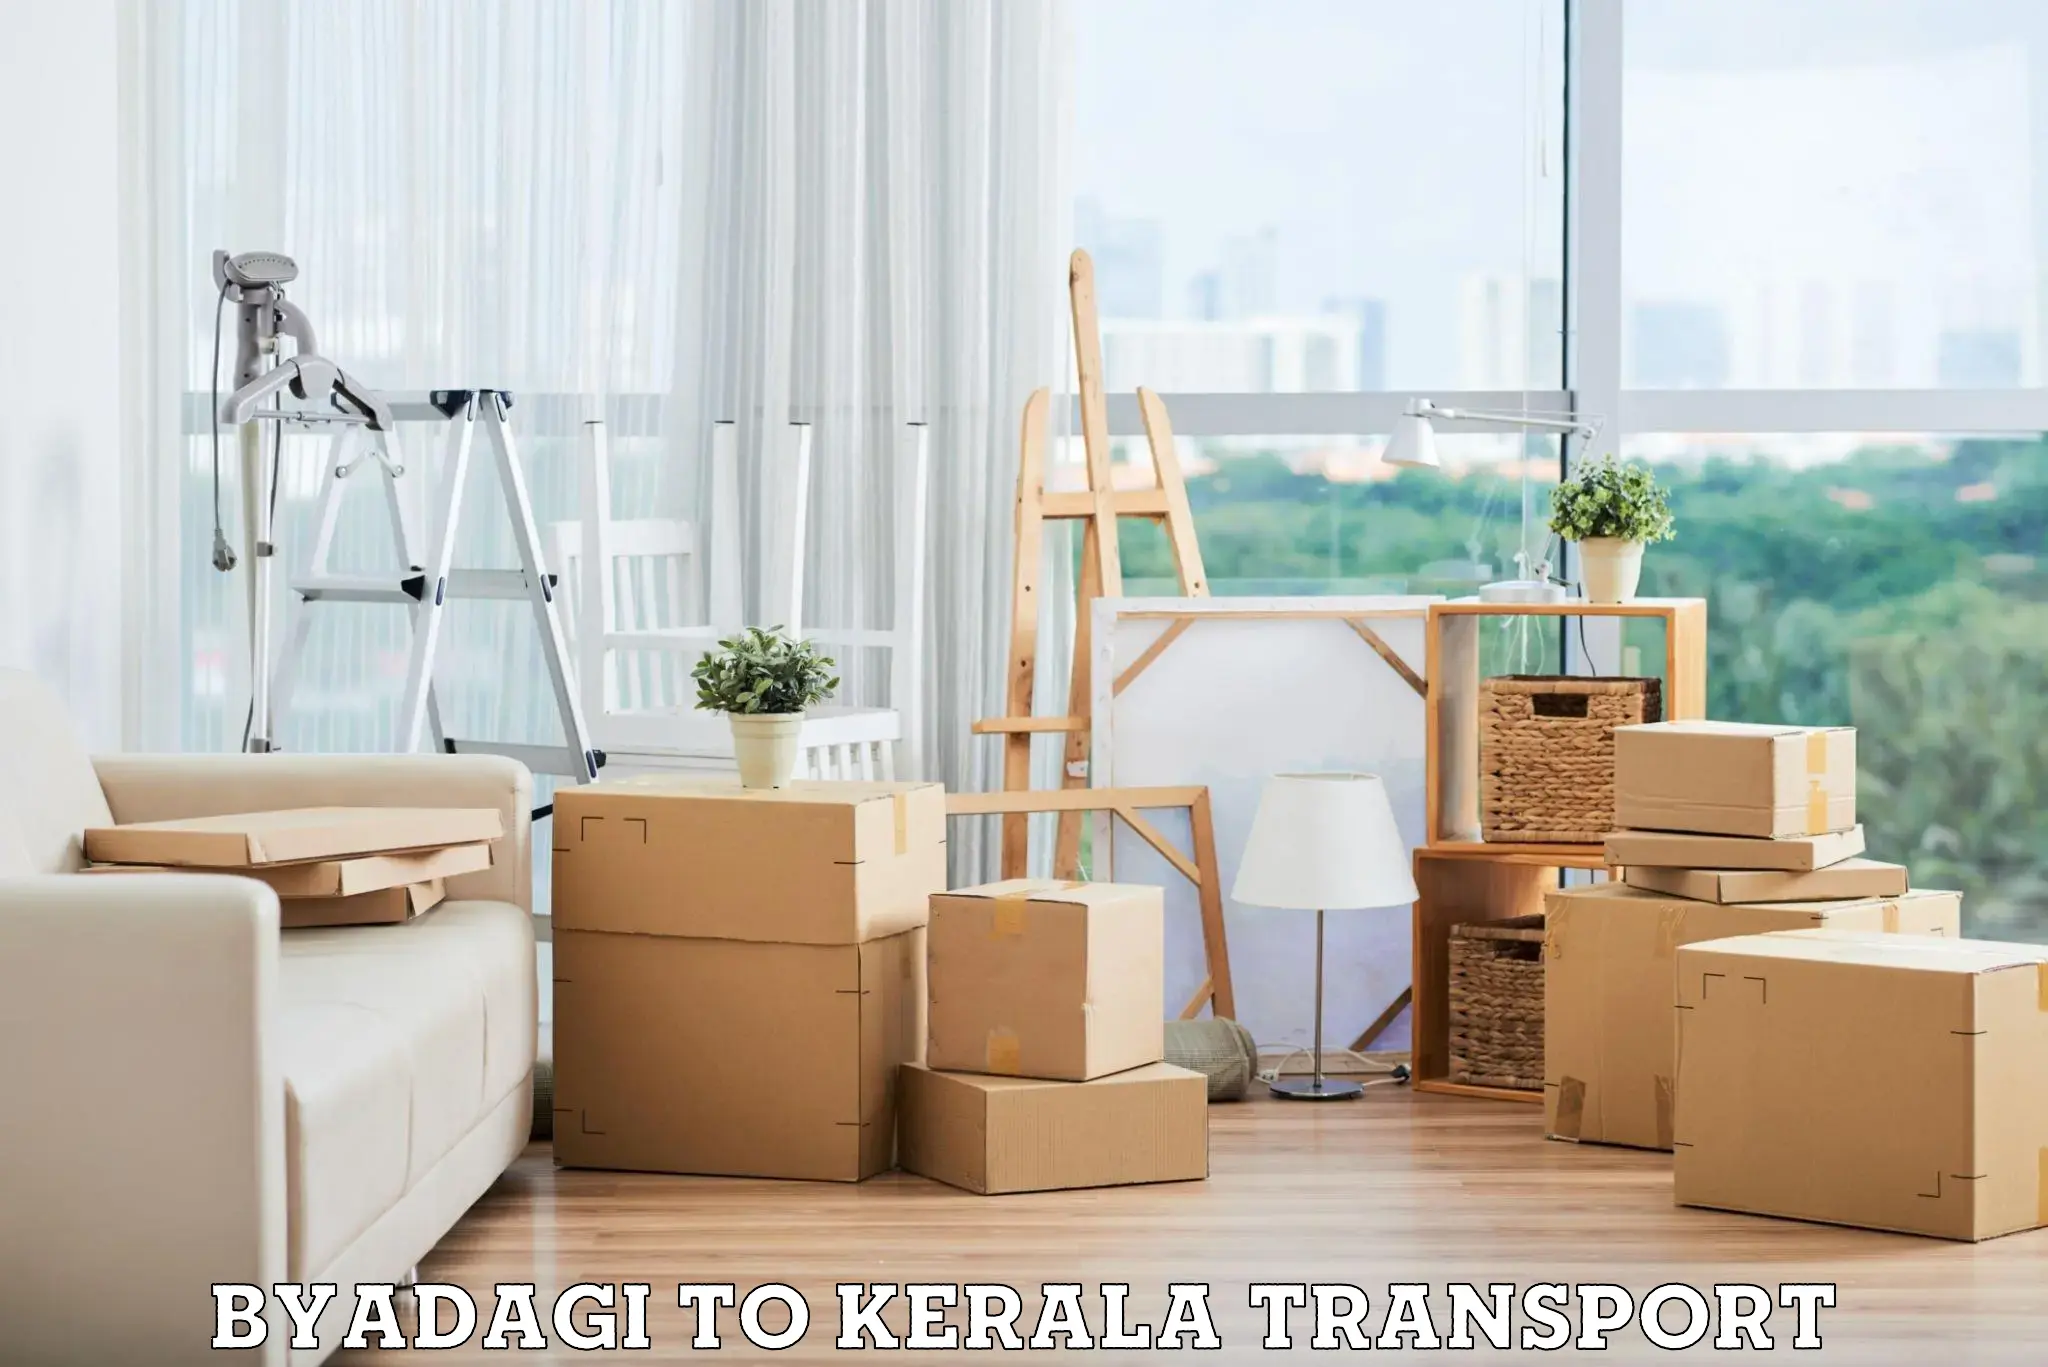 Online transport service Byadagi to Kerala